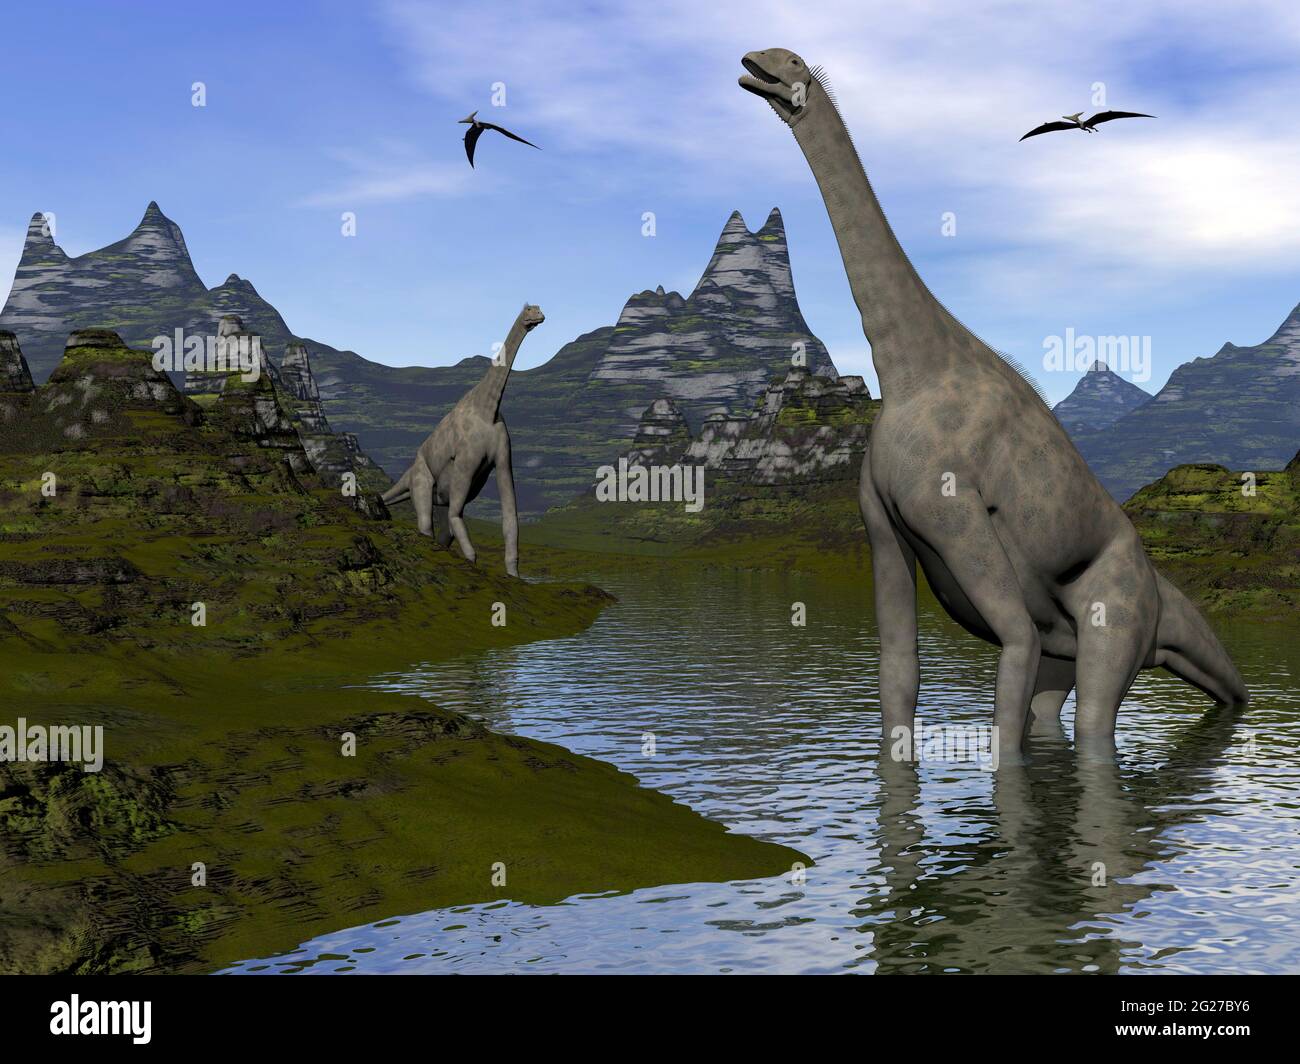 Atlasaurus dinosaurs walking along a river. Stock Photo